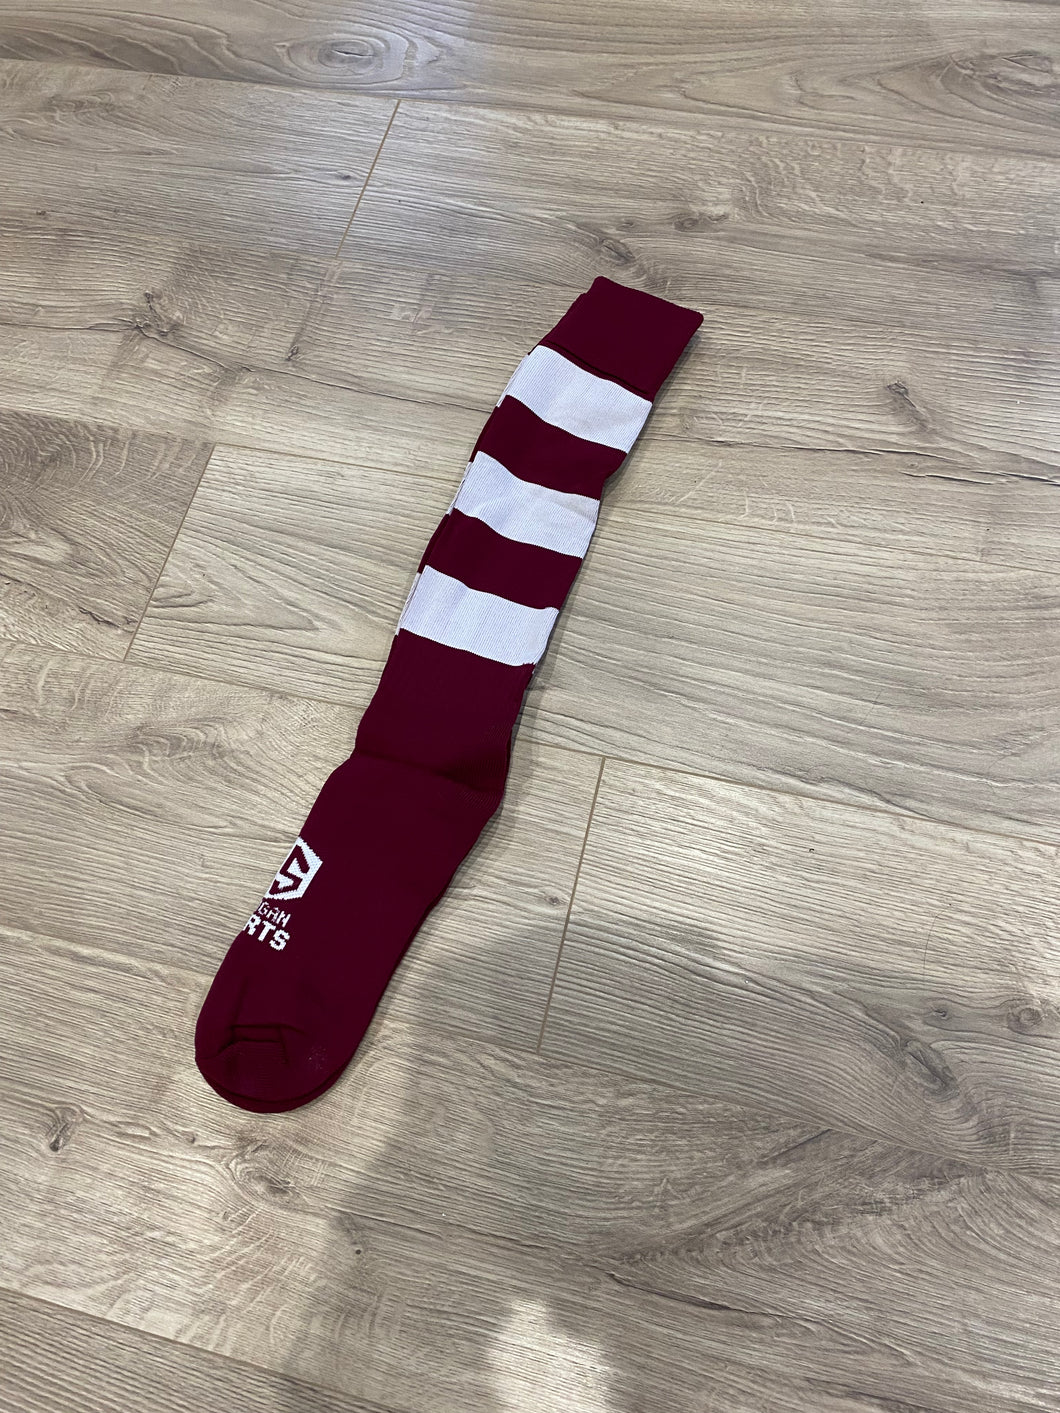 Long Socks - Maroon/White